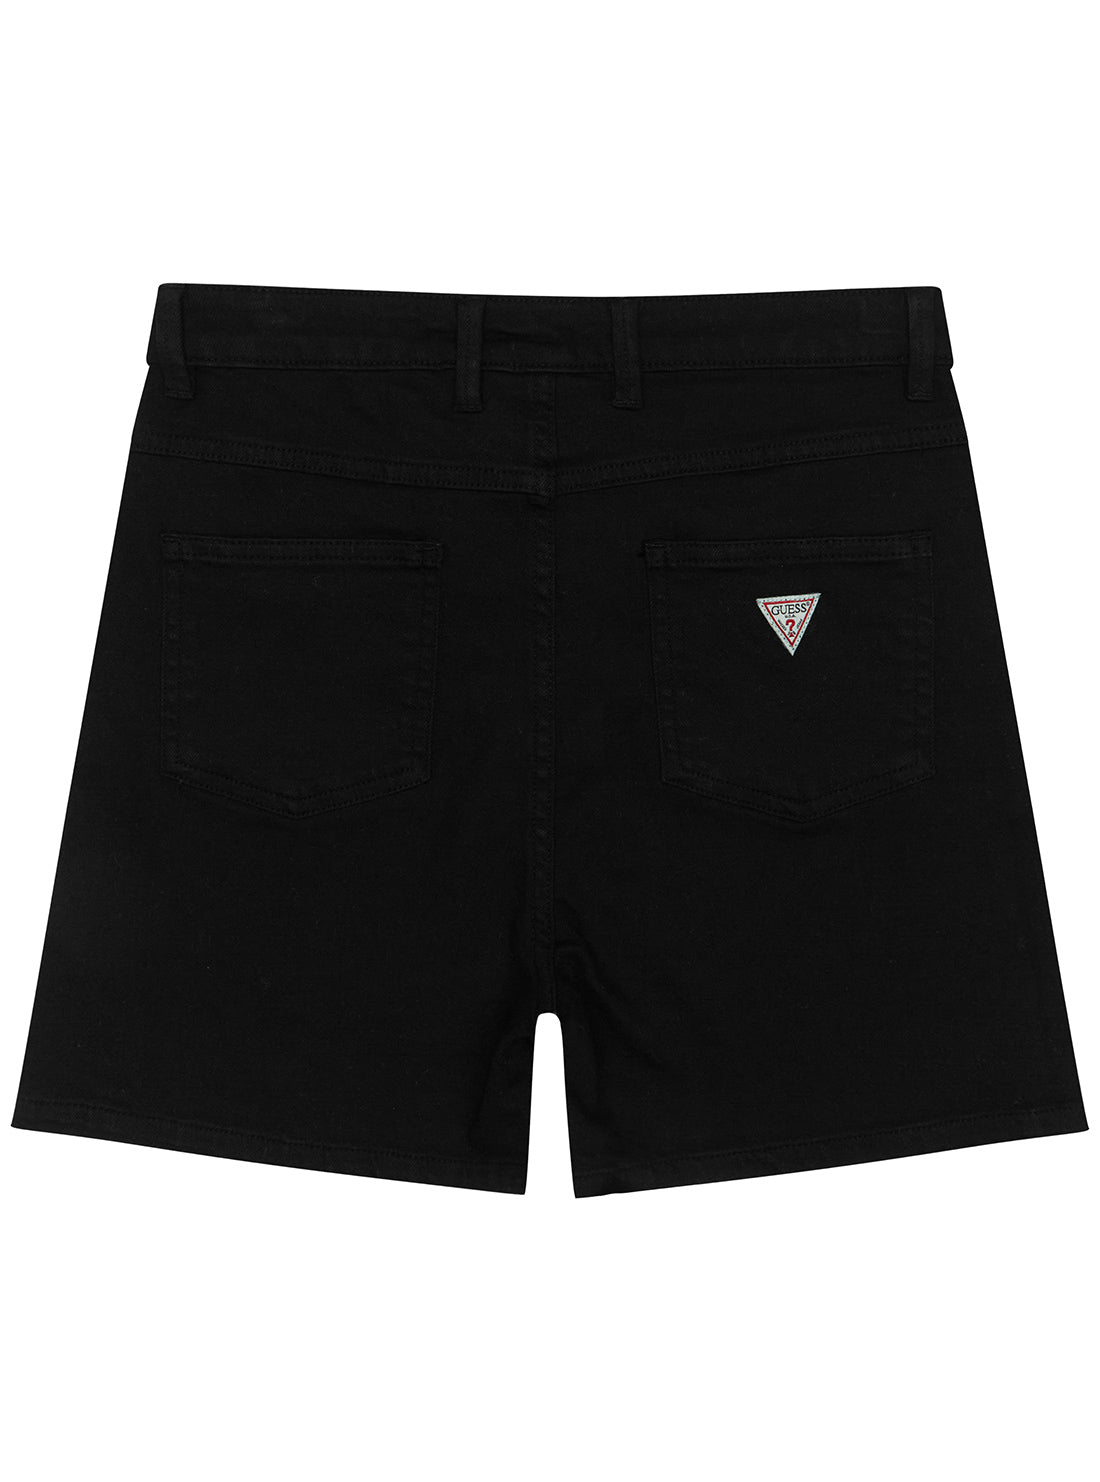 GUESS Black Bull Denim Shorts (7-16) back view\